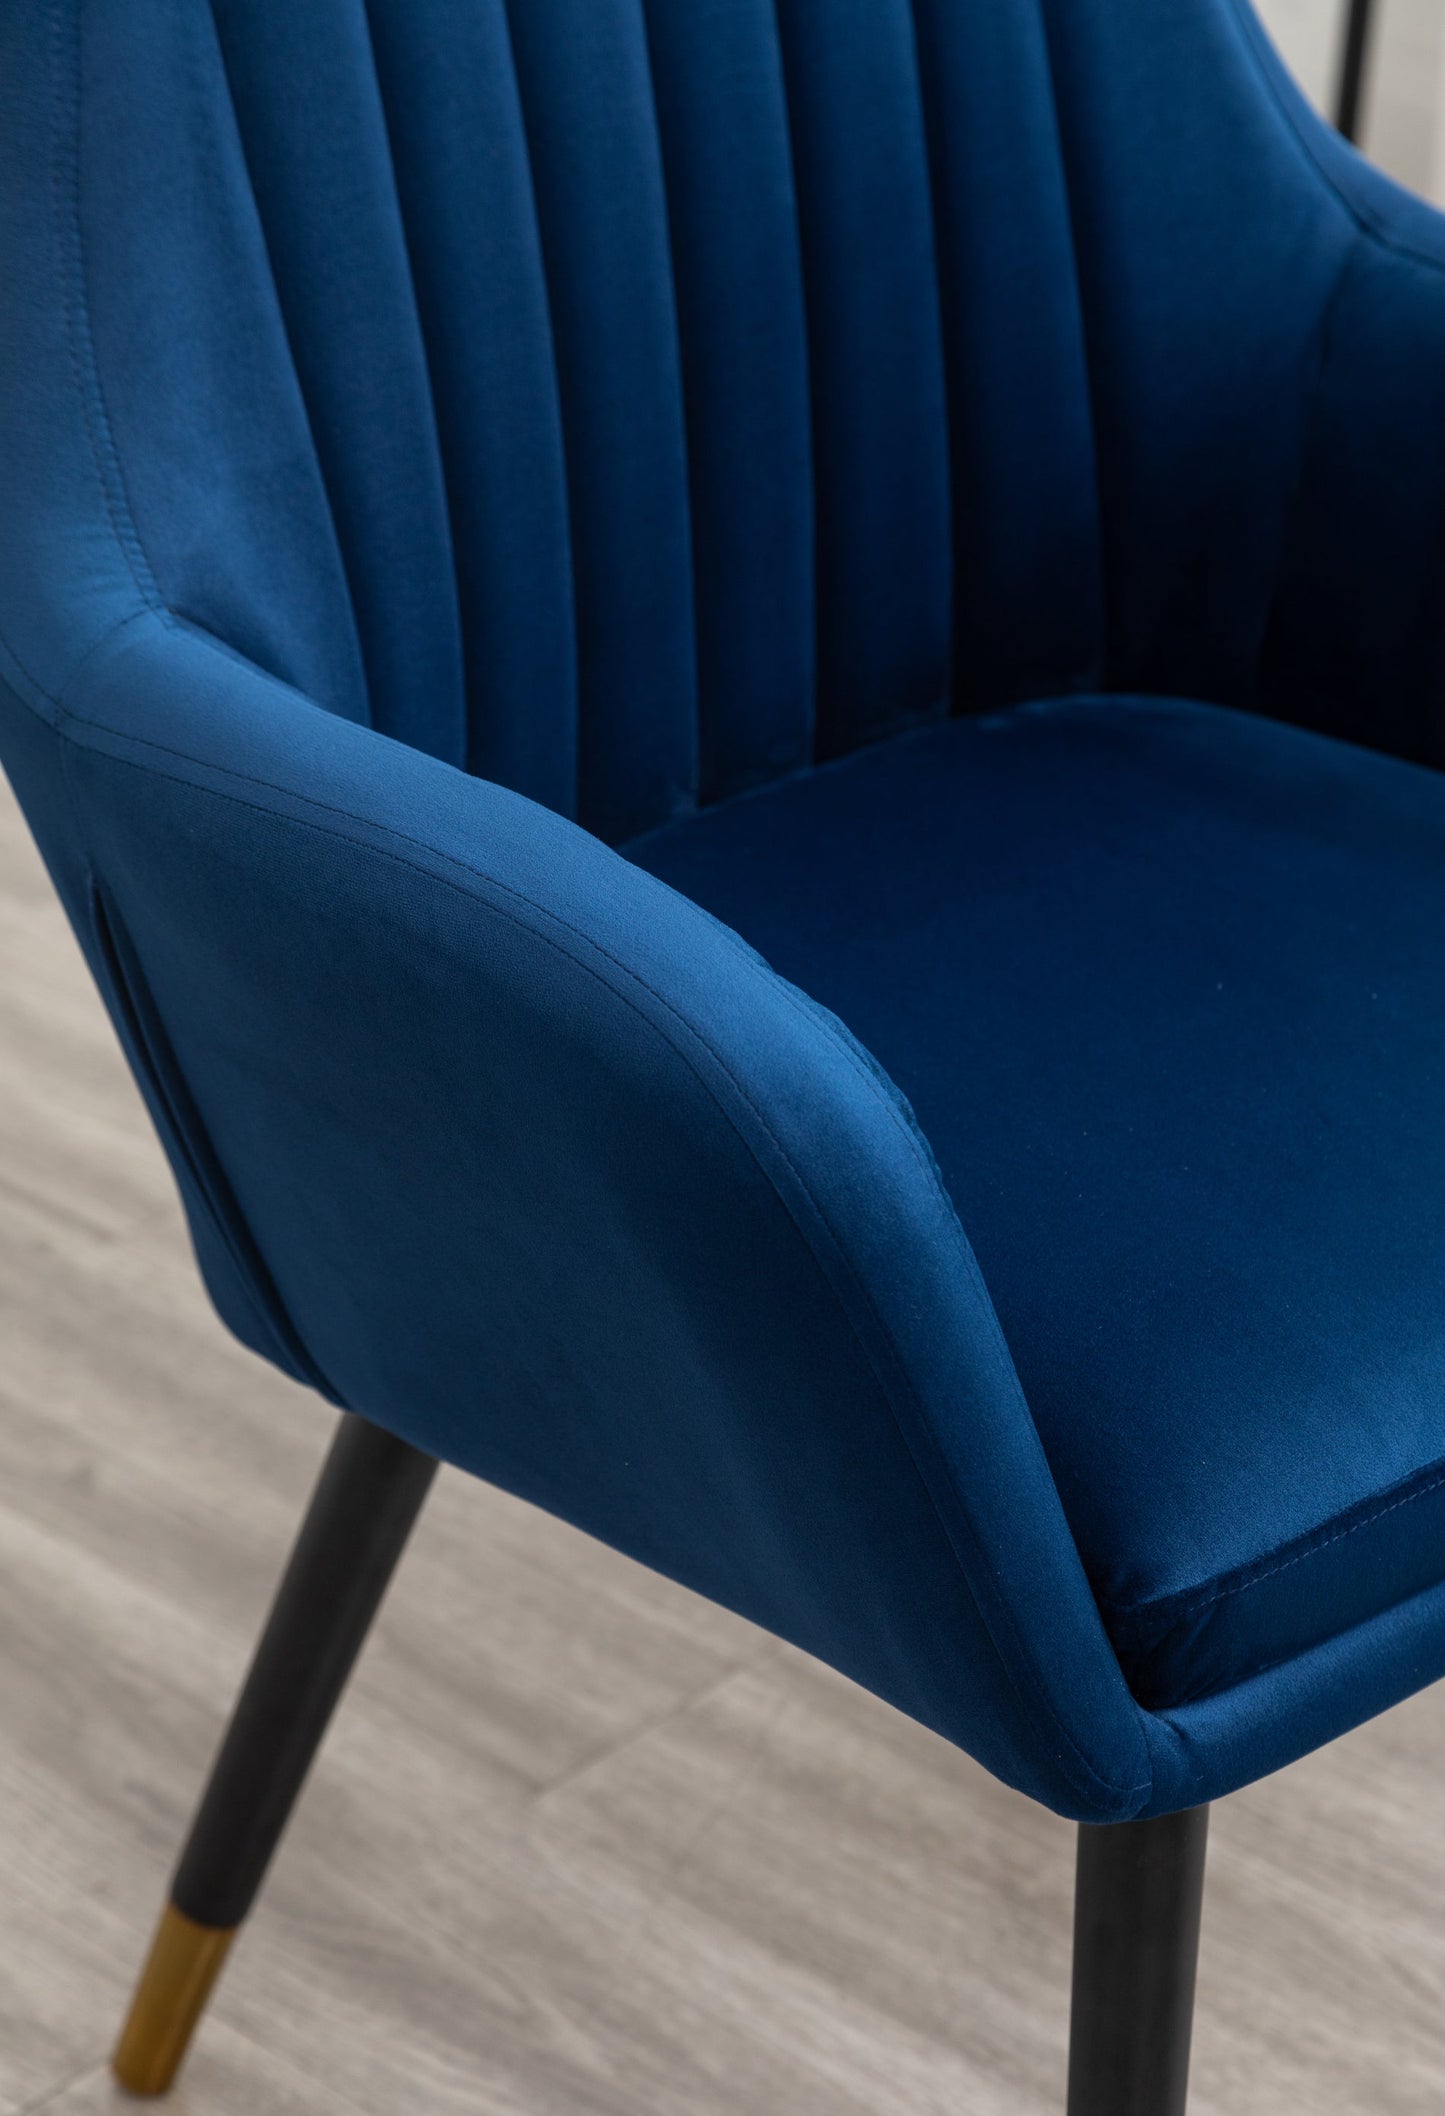 Tuchico Contemporary Velvet Upholstered Accent Chair, Blue